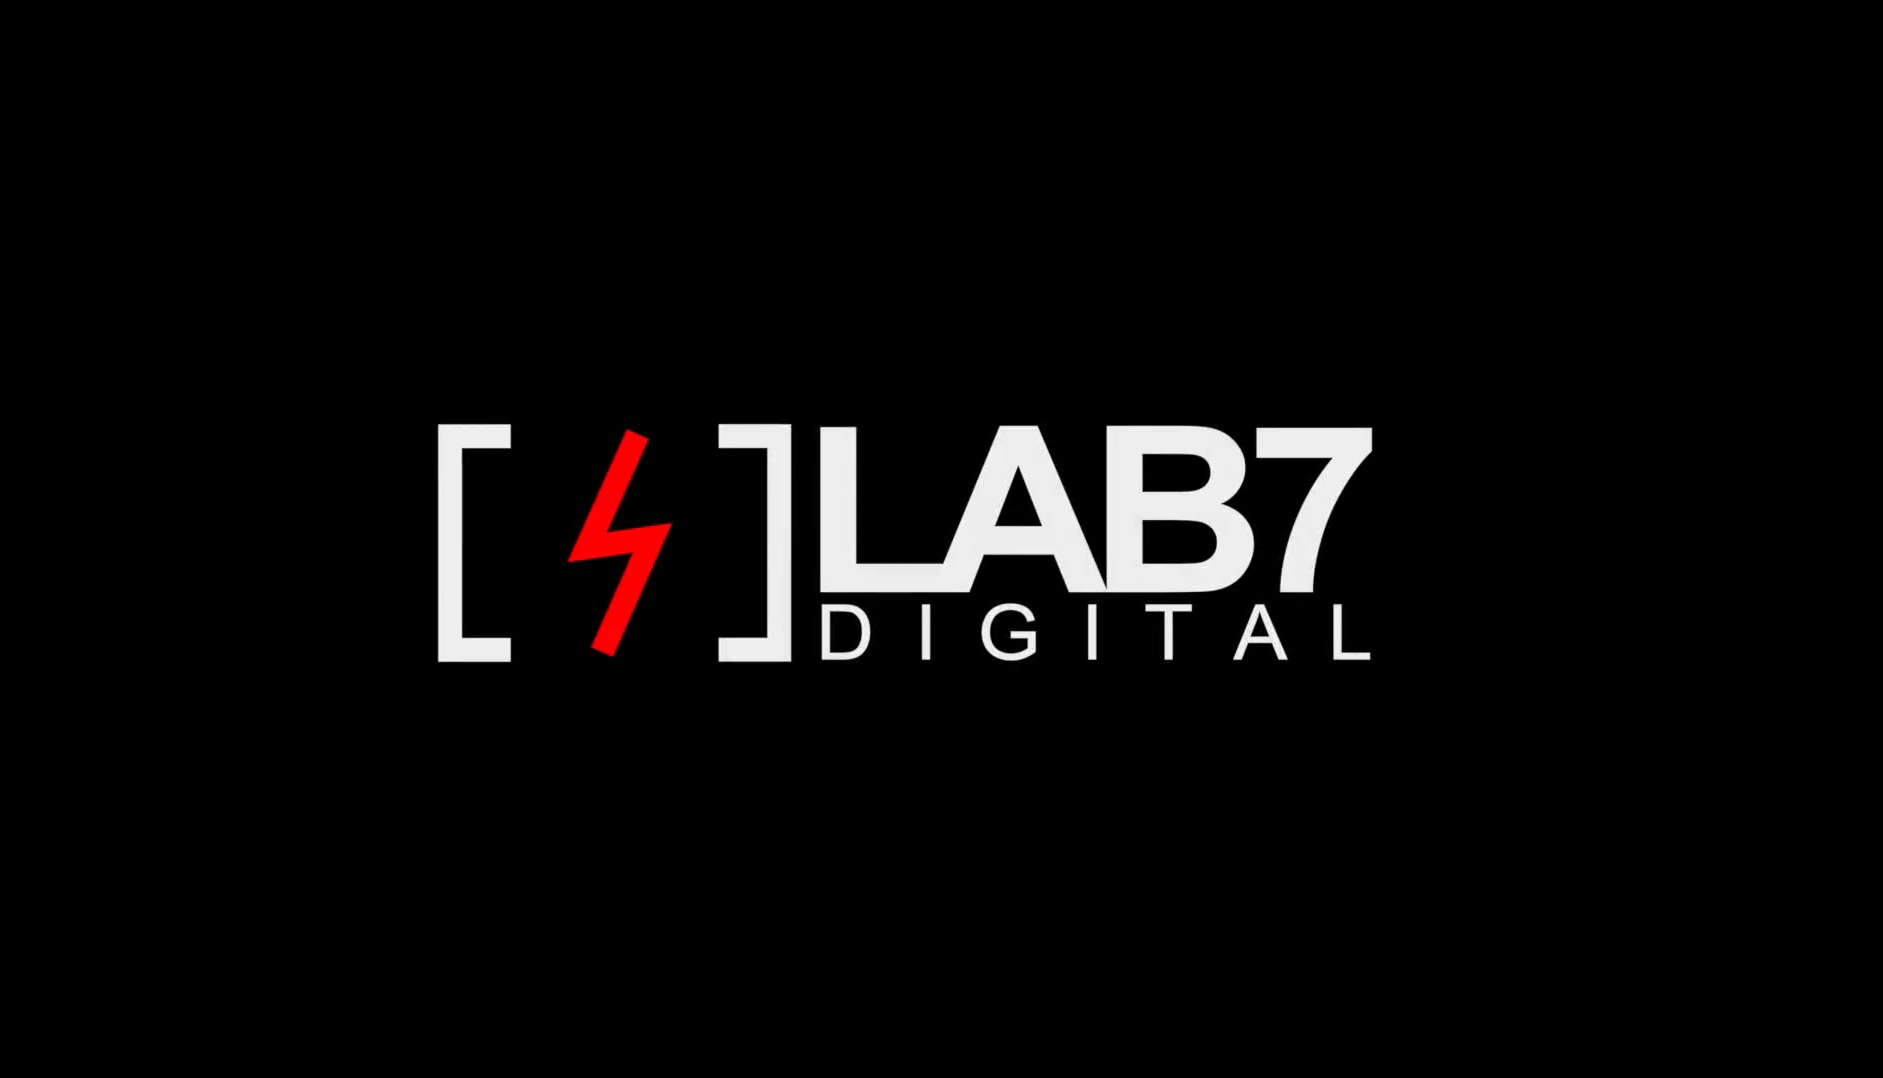 lab7digital